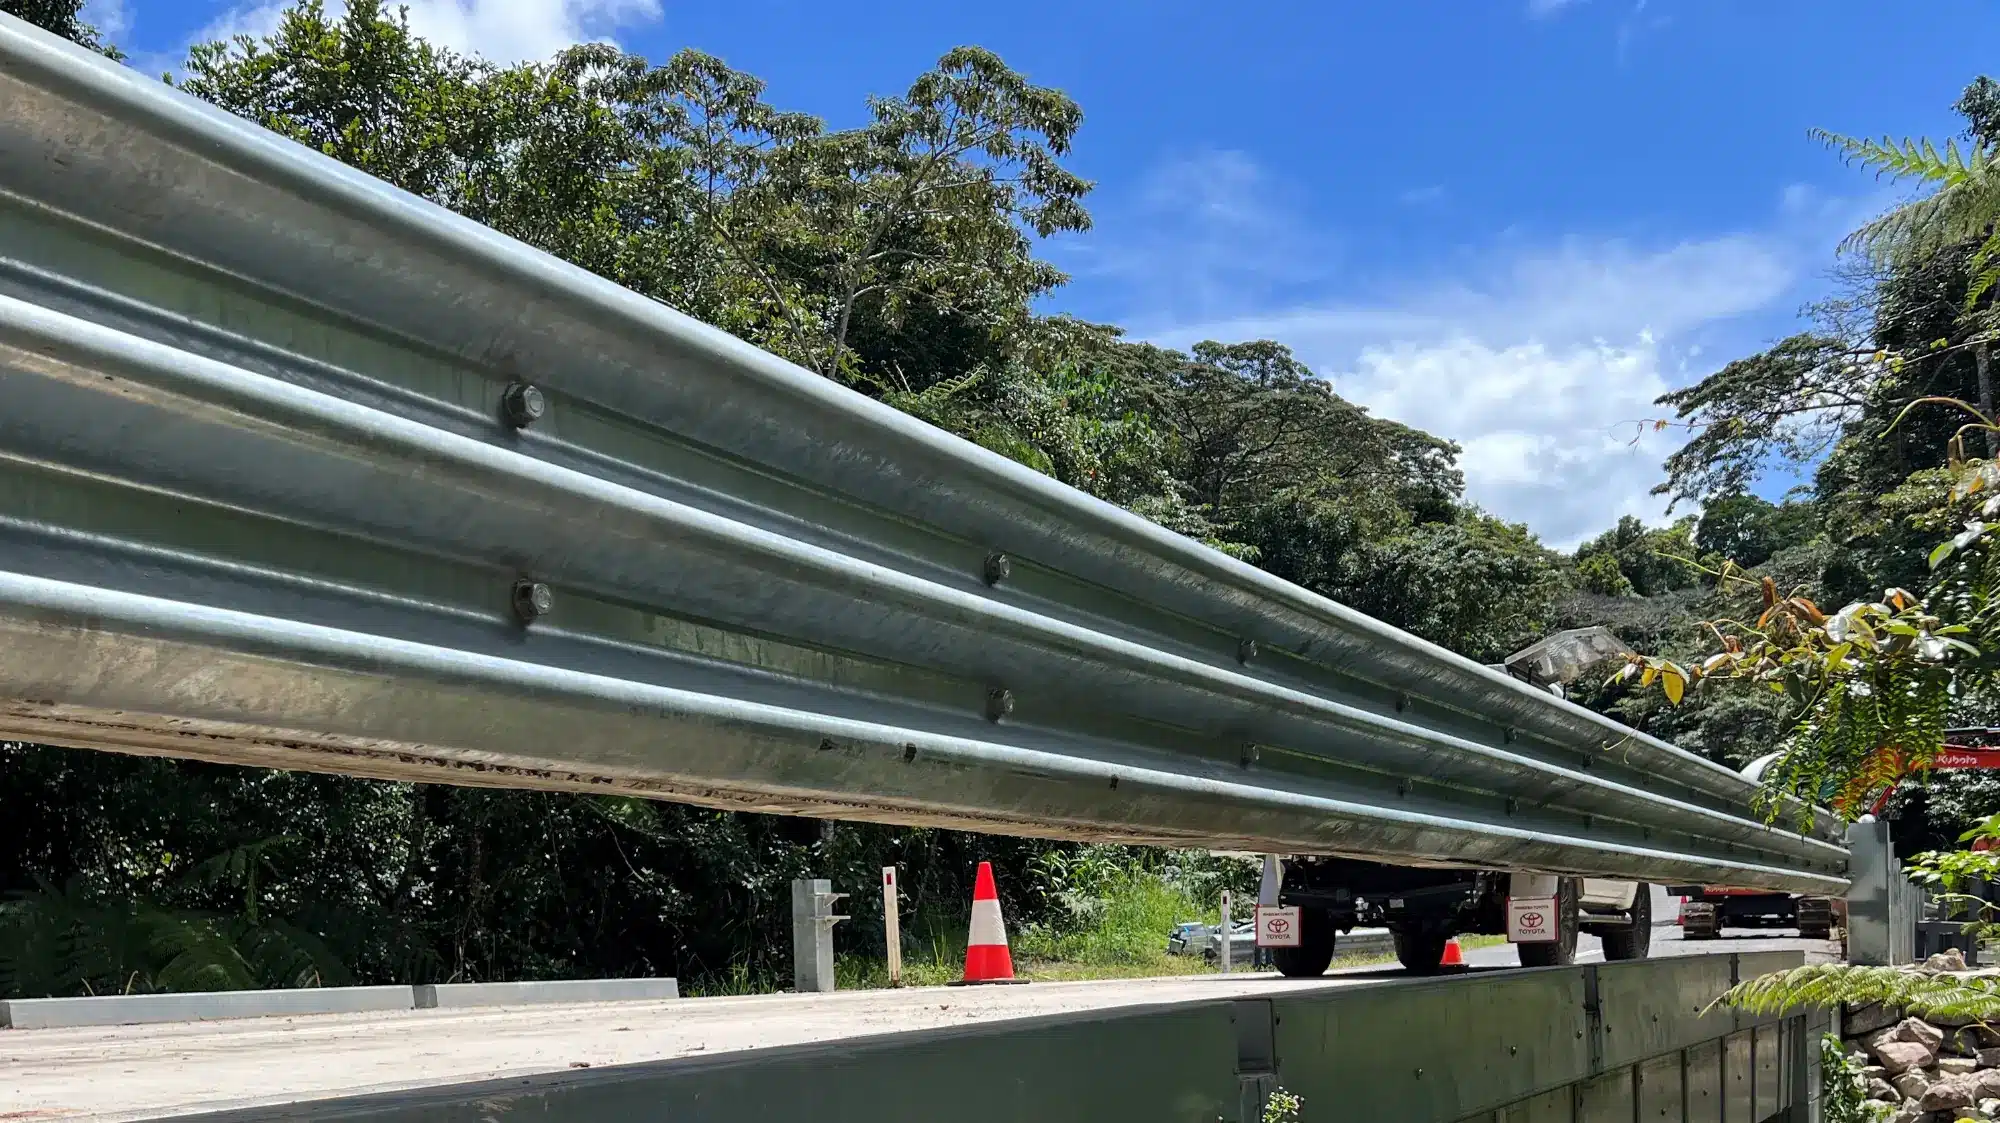 Croc guard bridge and culvert barrier installed on a bridge